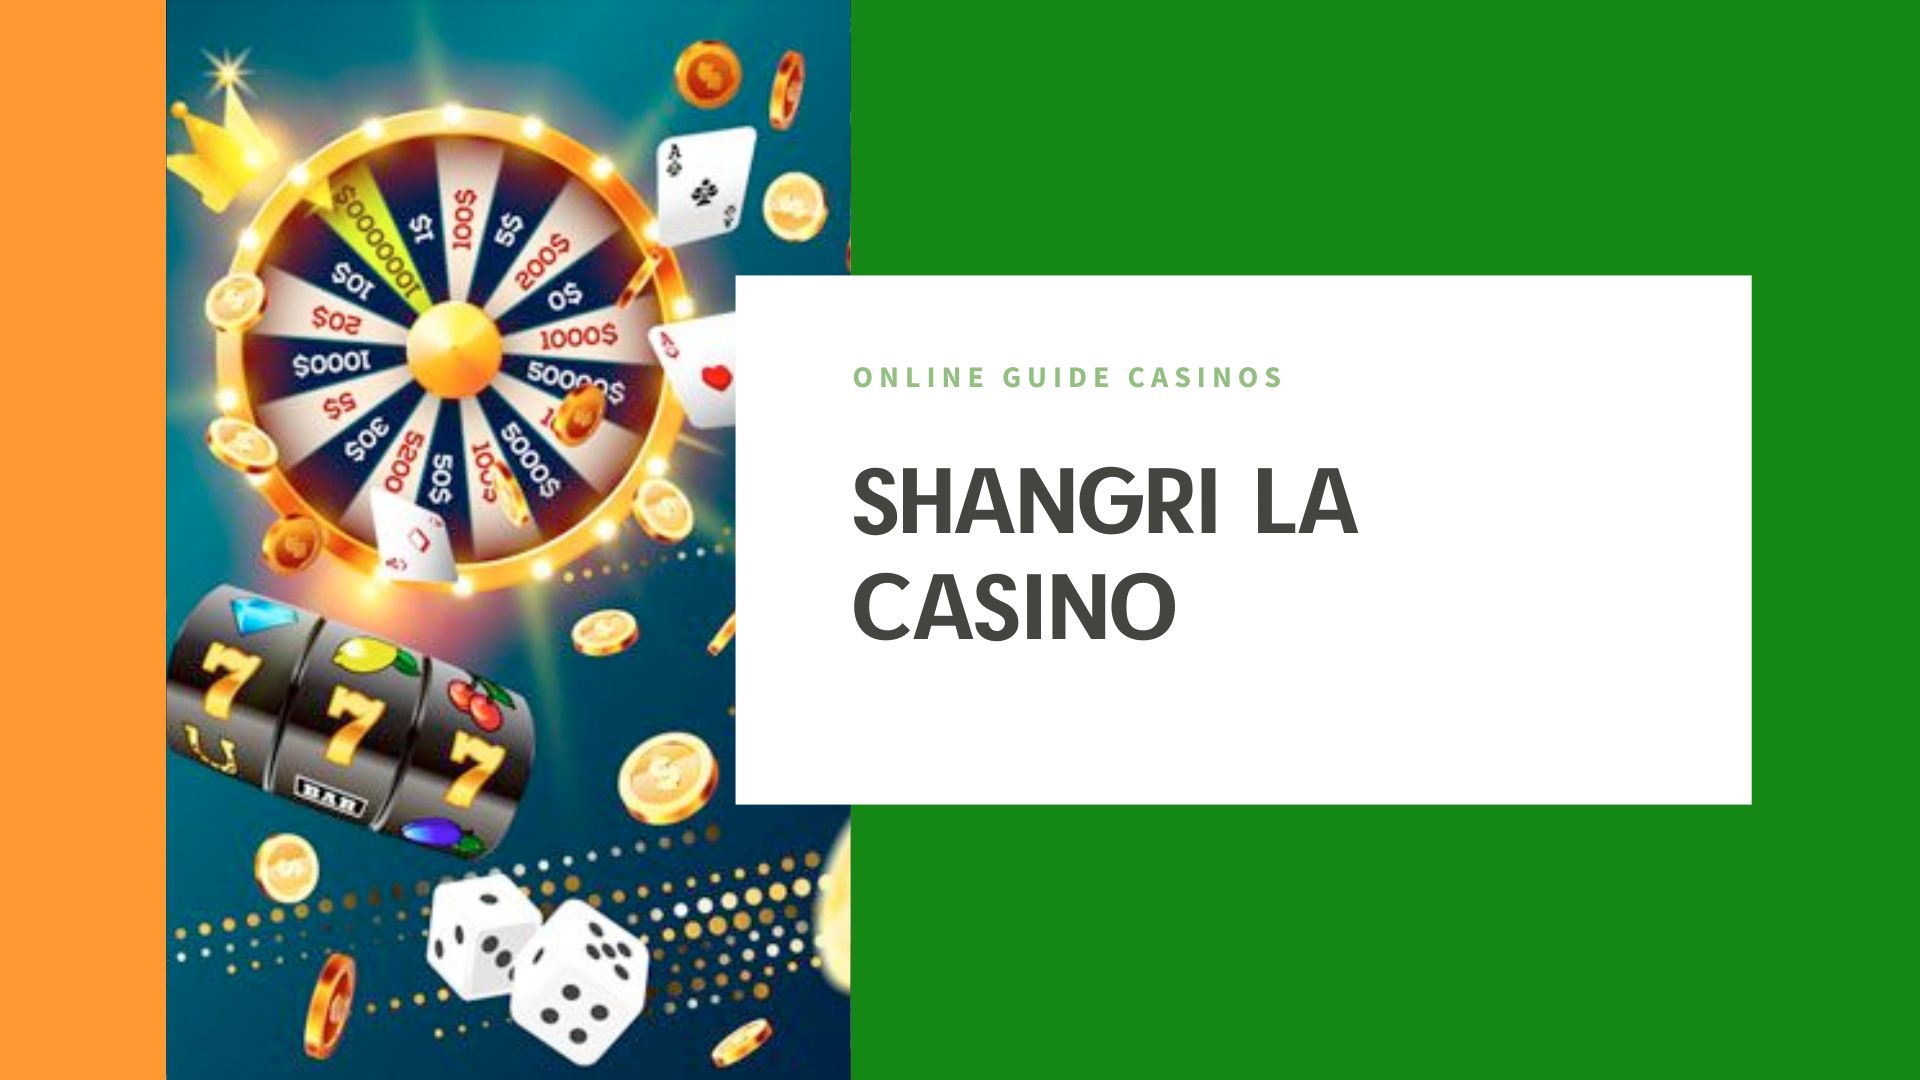 Shangri La Casino - Manual About Indian Gambling Giant